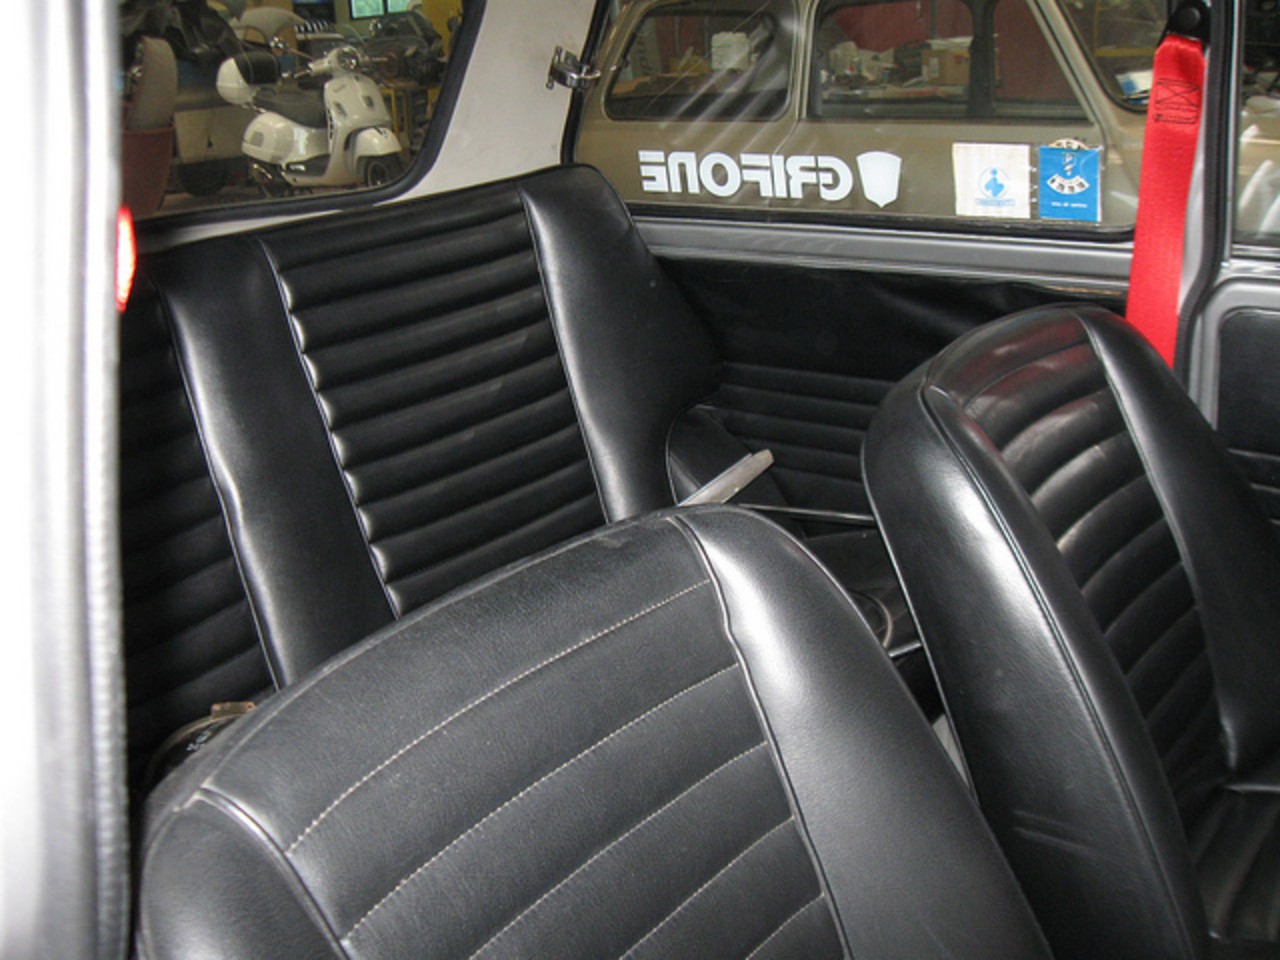 Innocenti Mini Cooper 1000 Mk3 - intérieur / Flickr - Partage de photos!